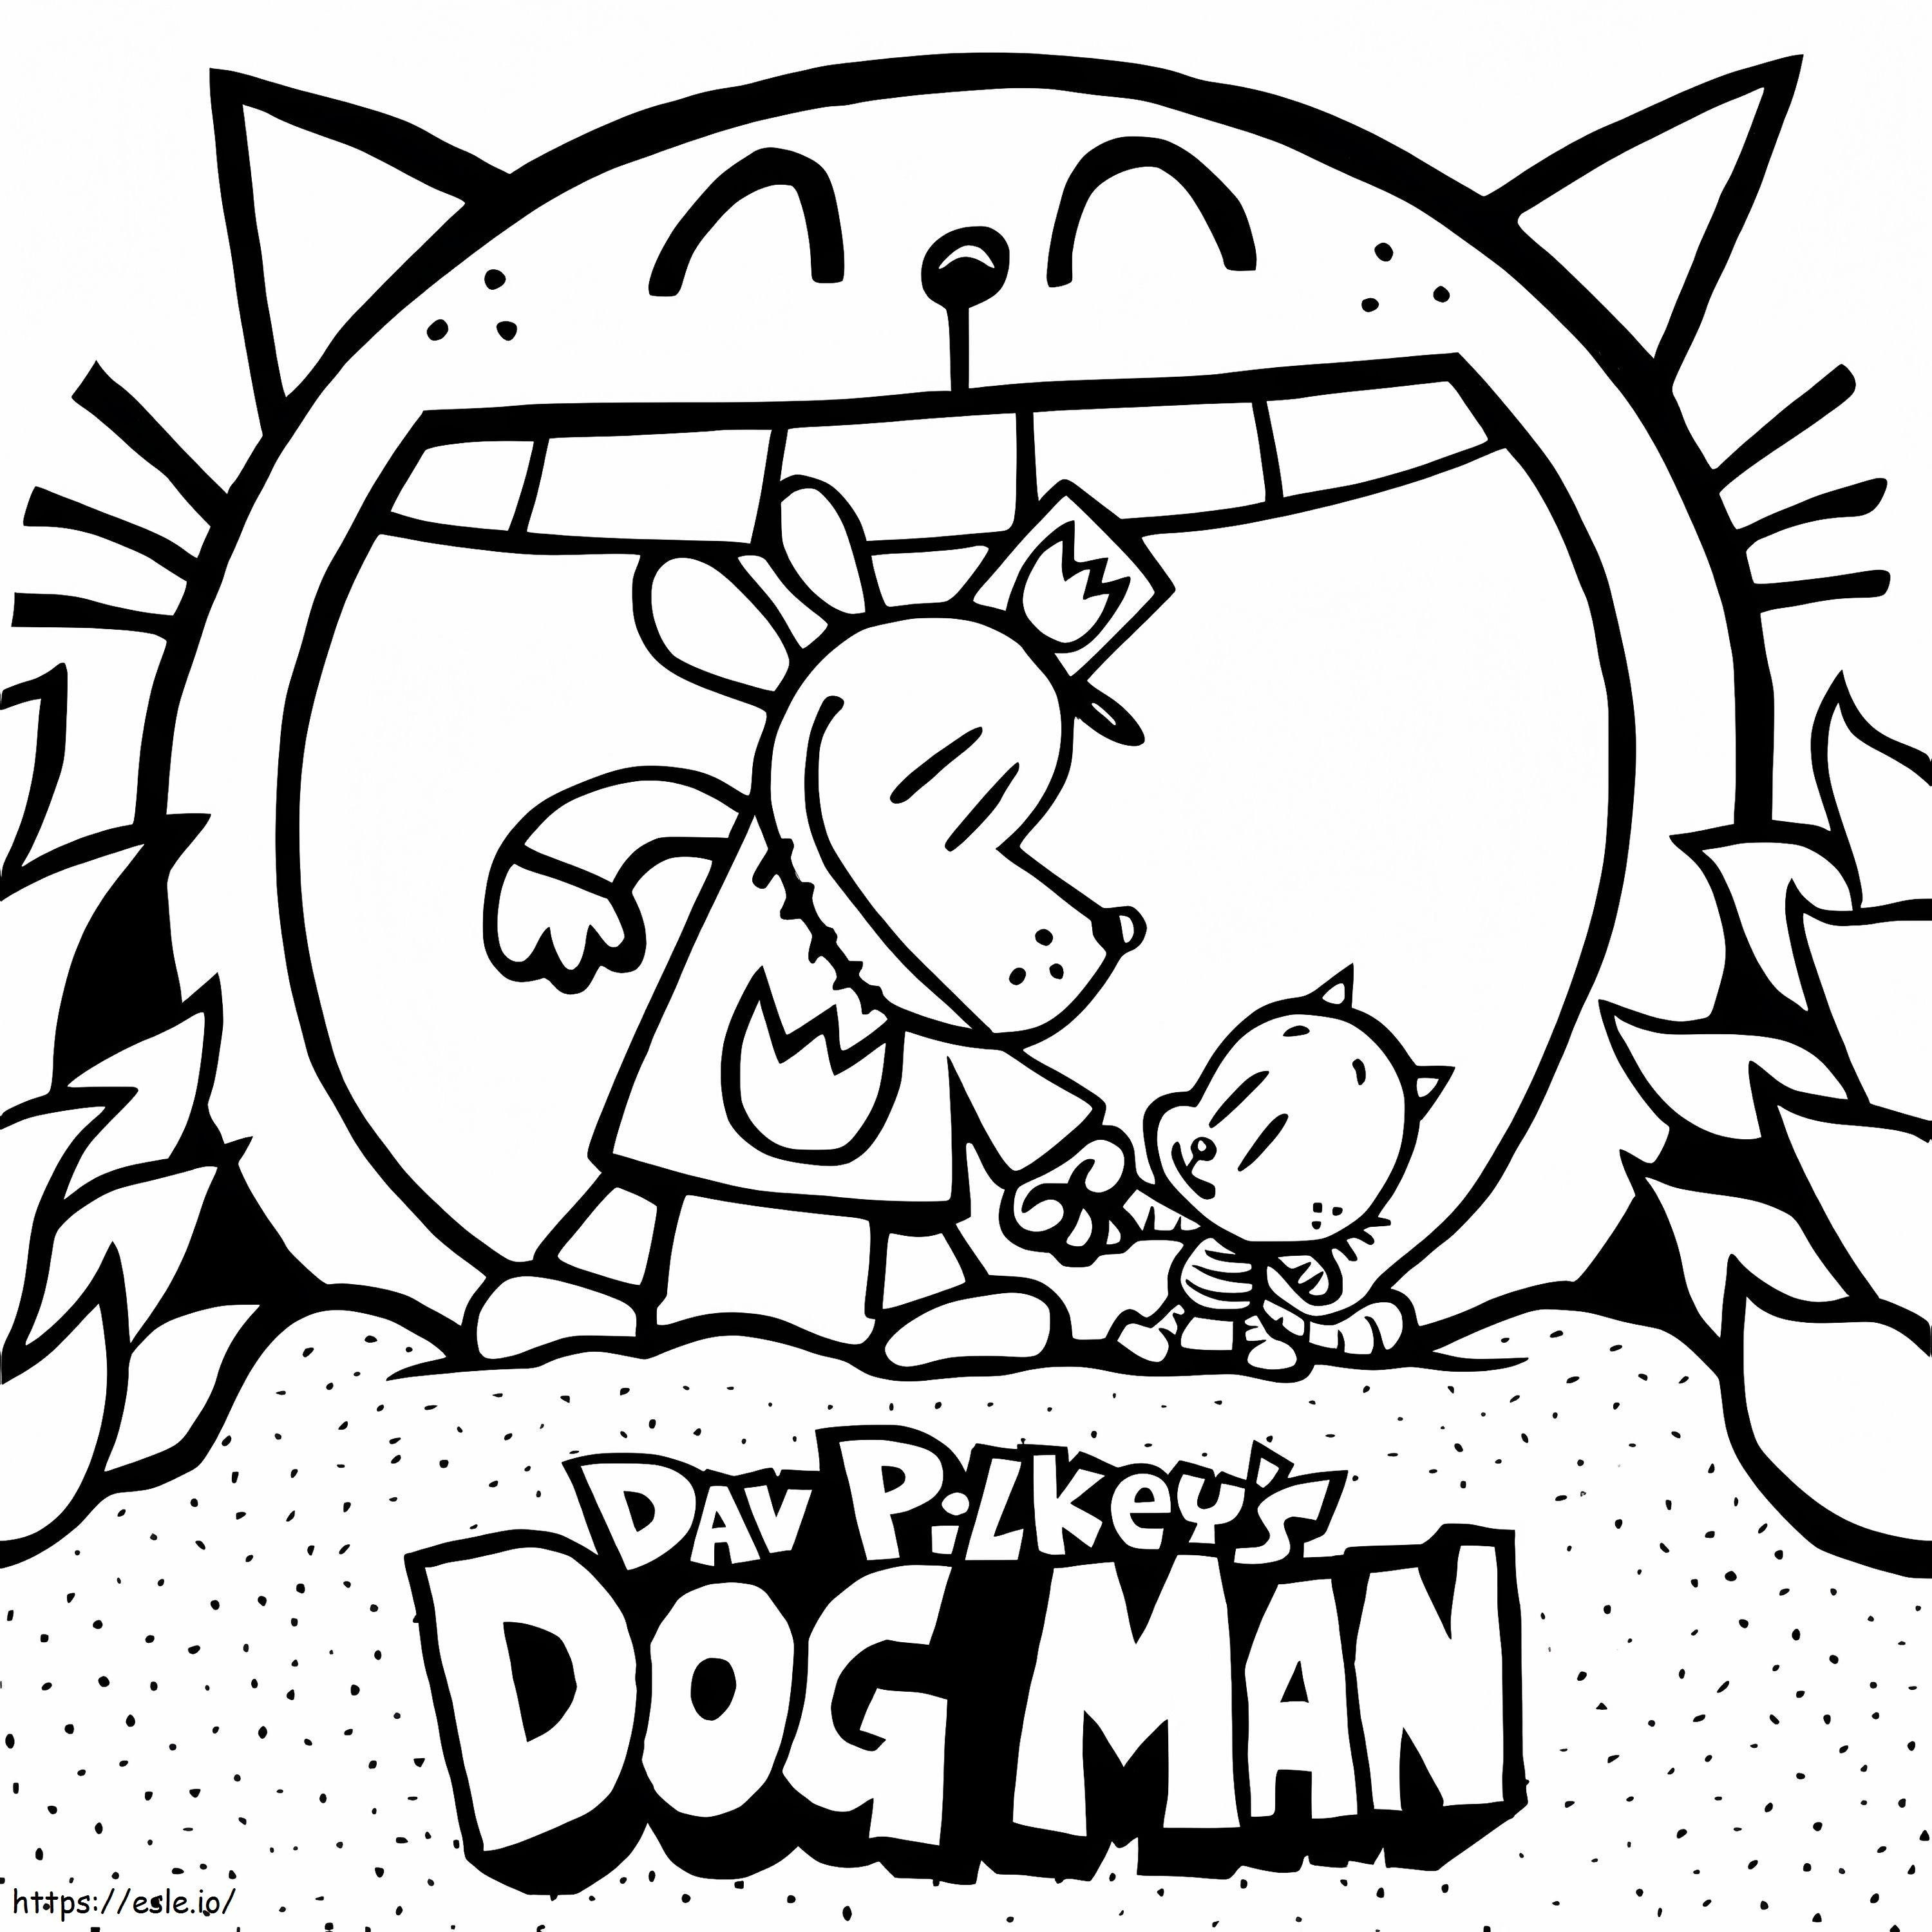 Dog Man 1 coloring page